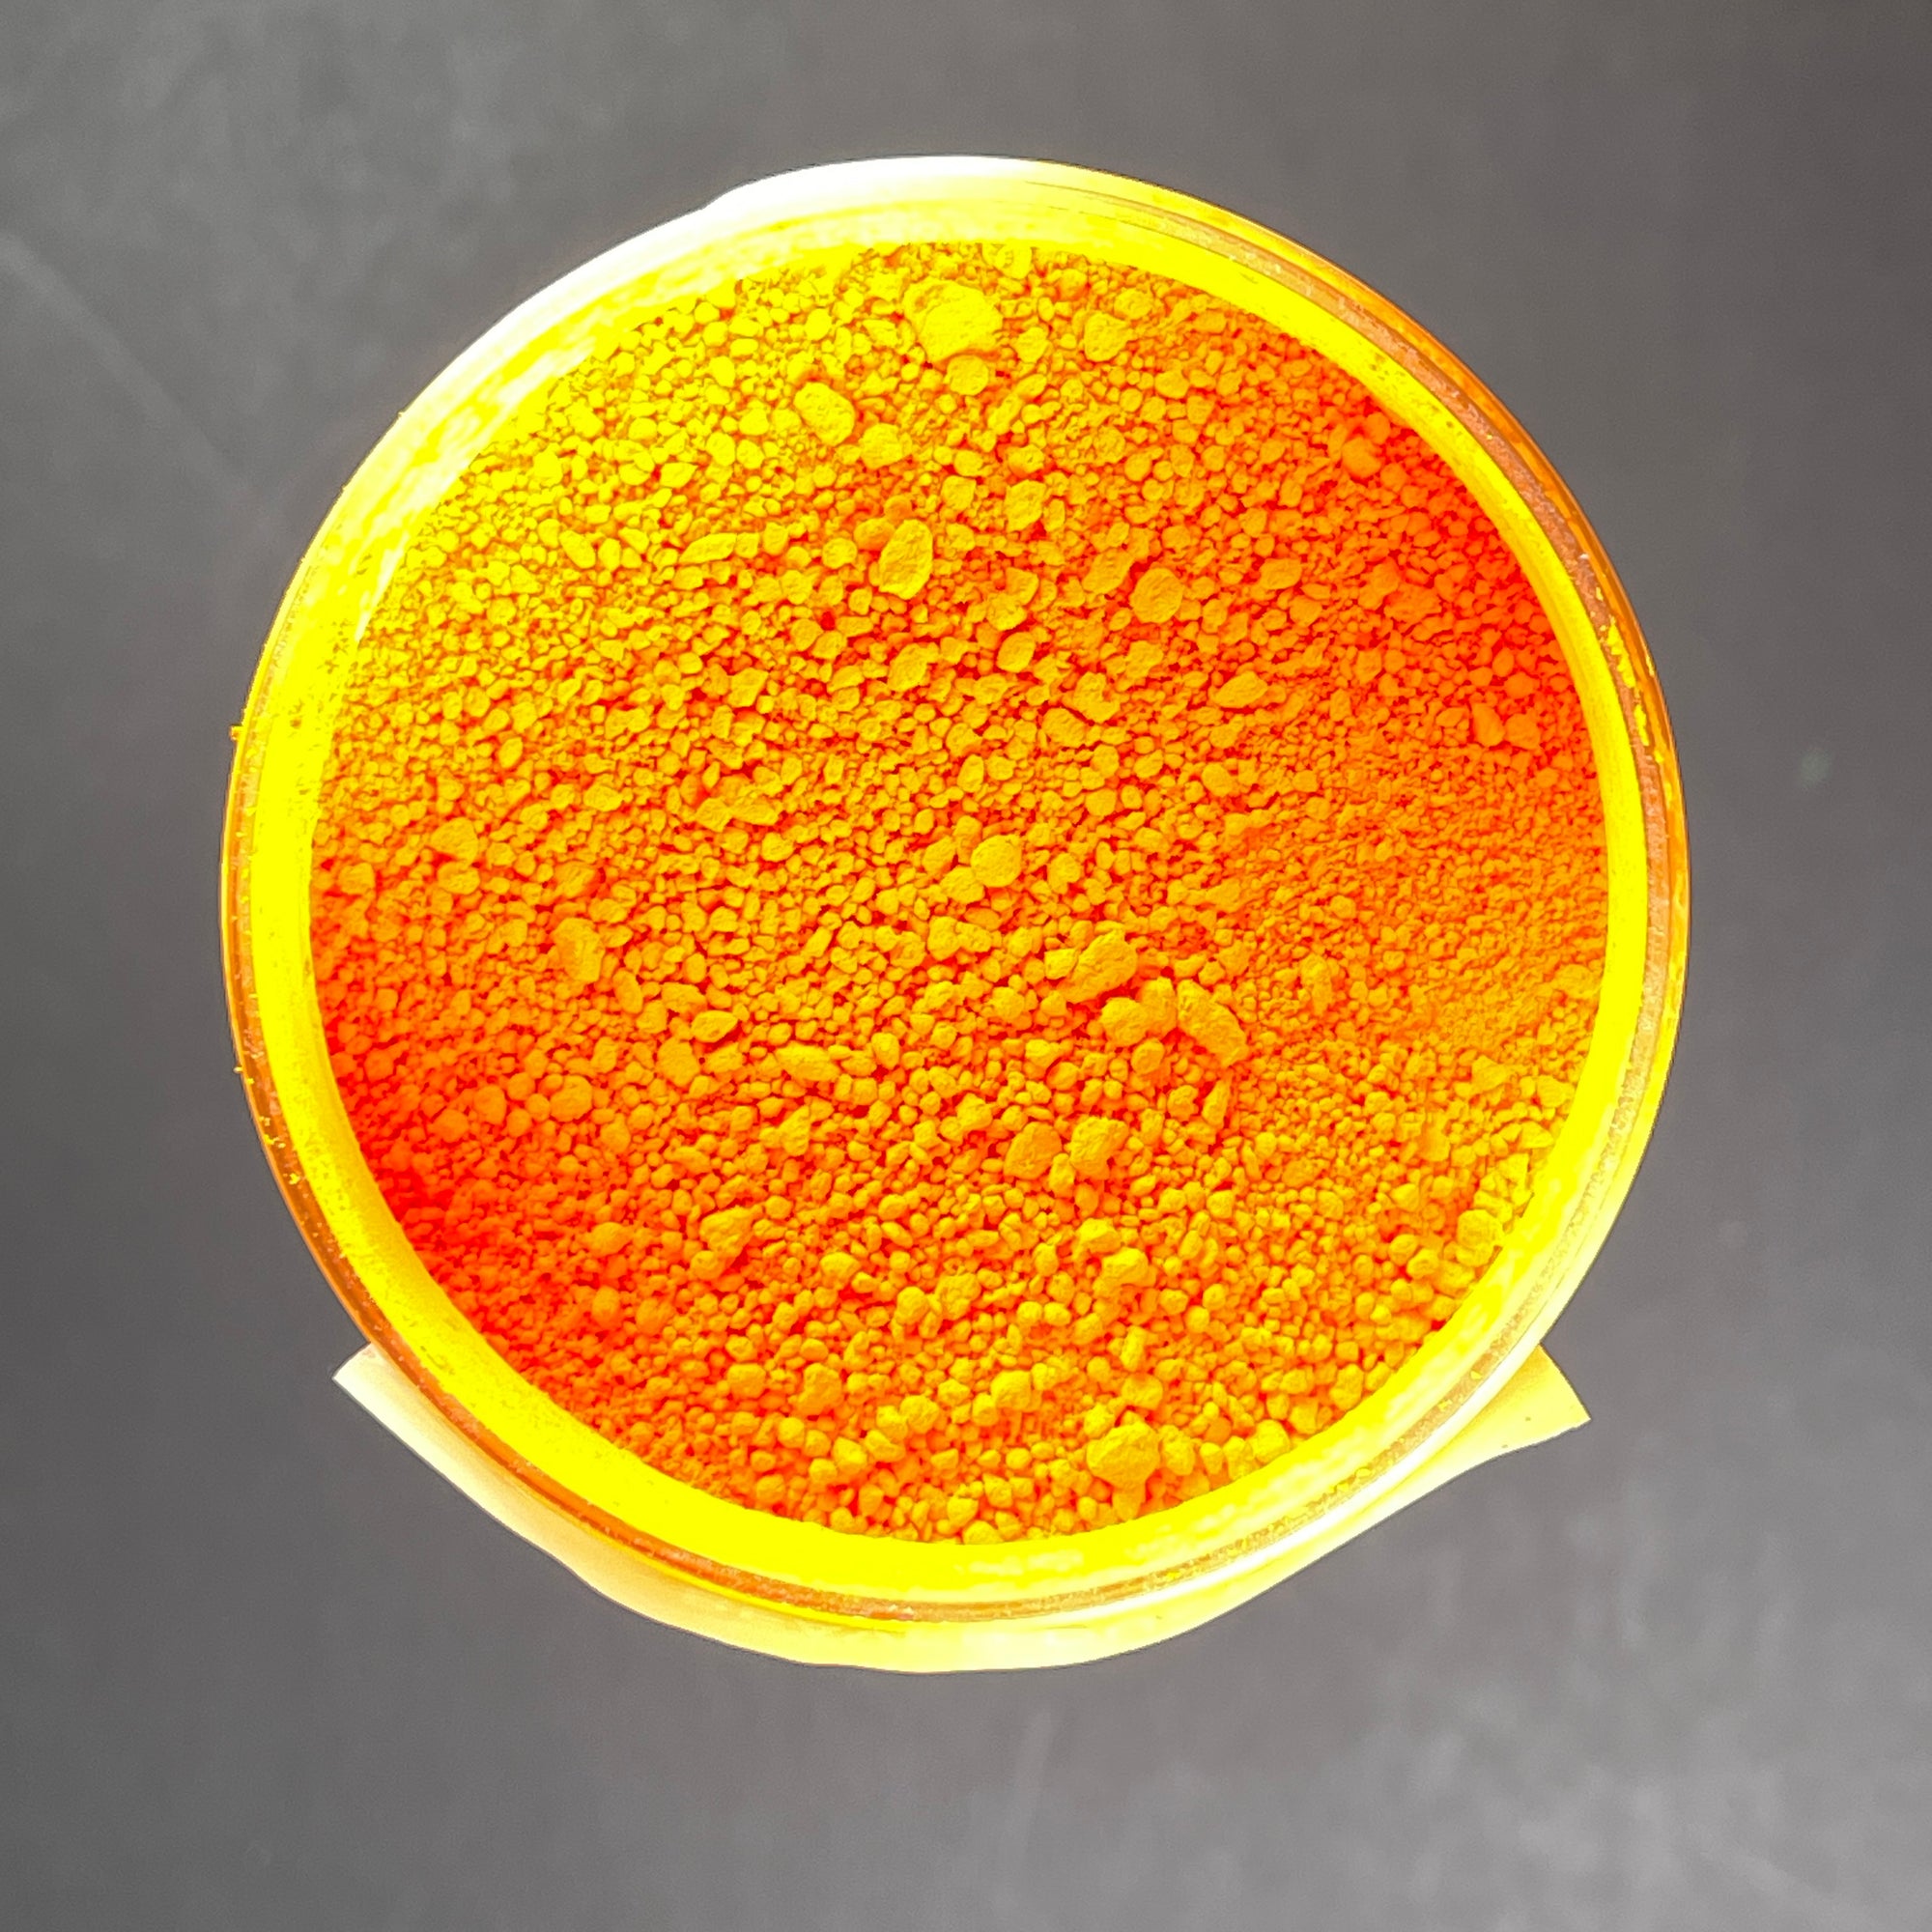 Fluorescent Yellow Orange Mica Powder